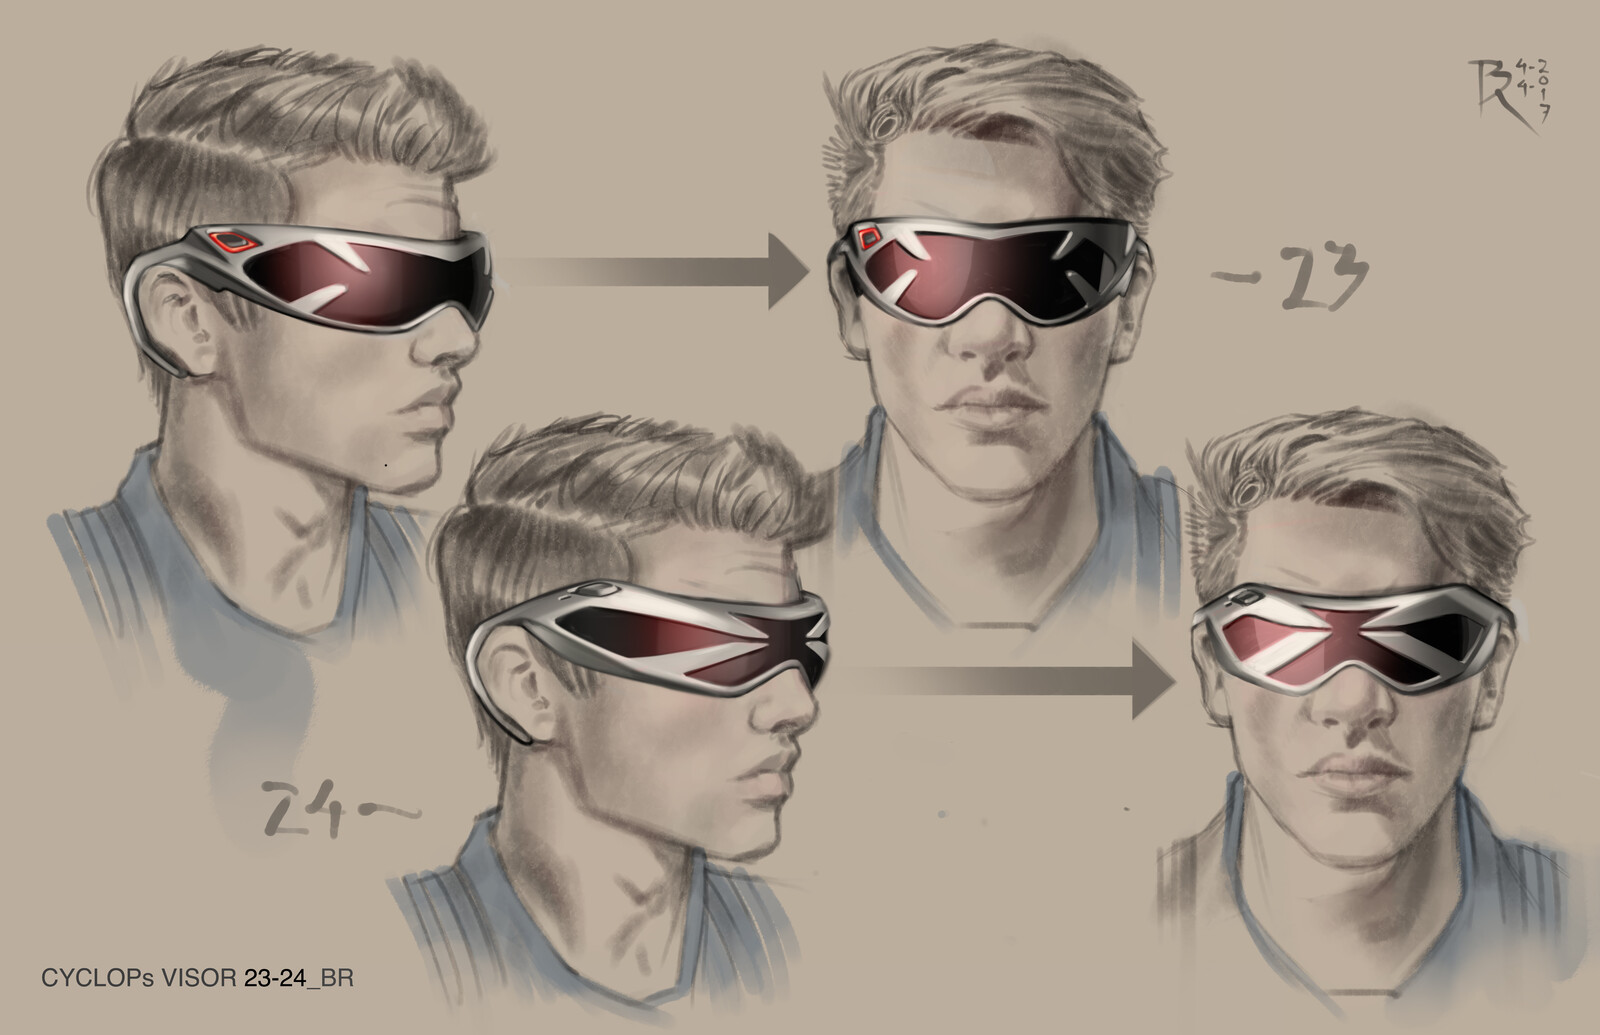 Cyclops' Visor 23-24